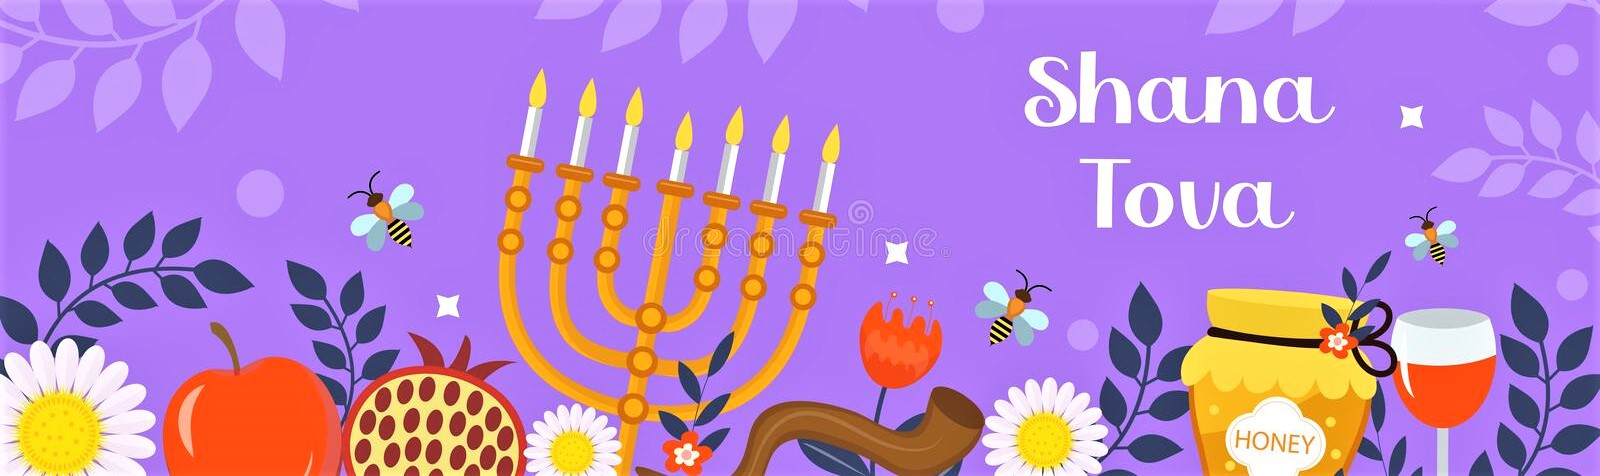 Happy Rosh Hashana, the Jewish New-Year festival, to all who celebrate it